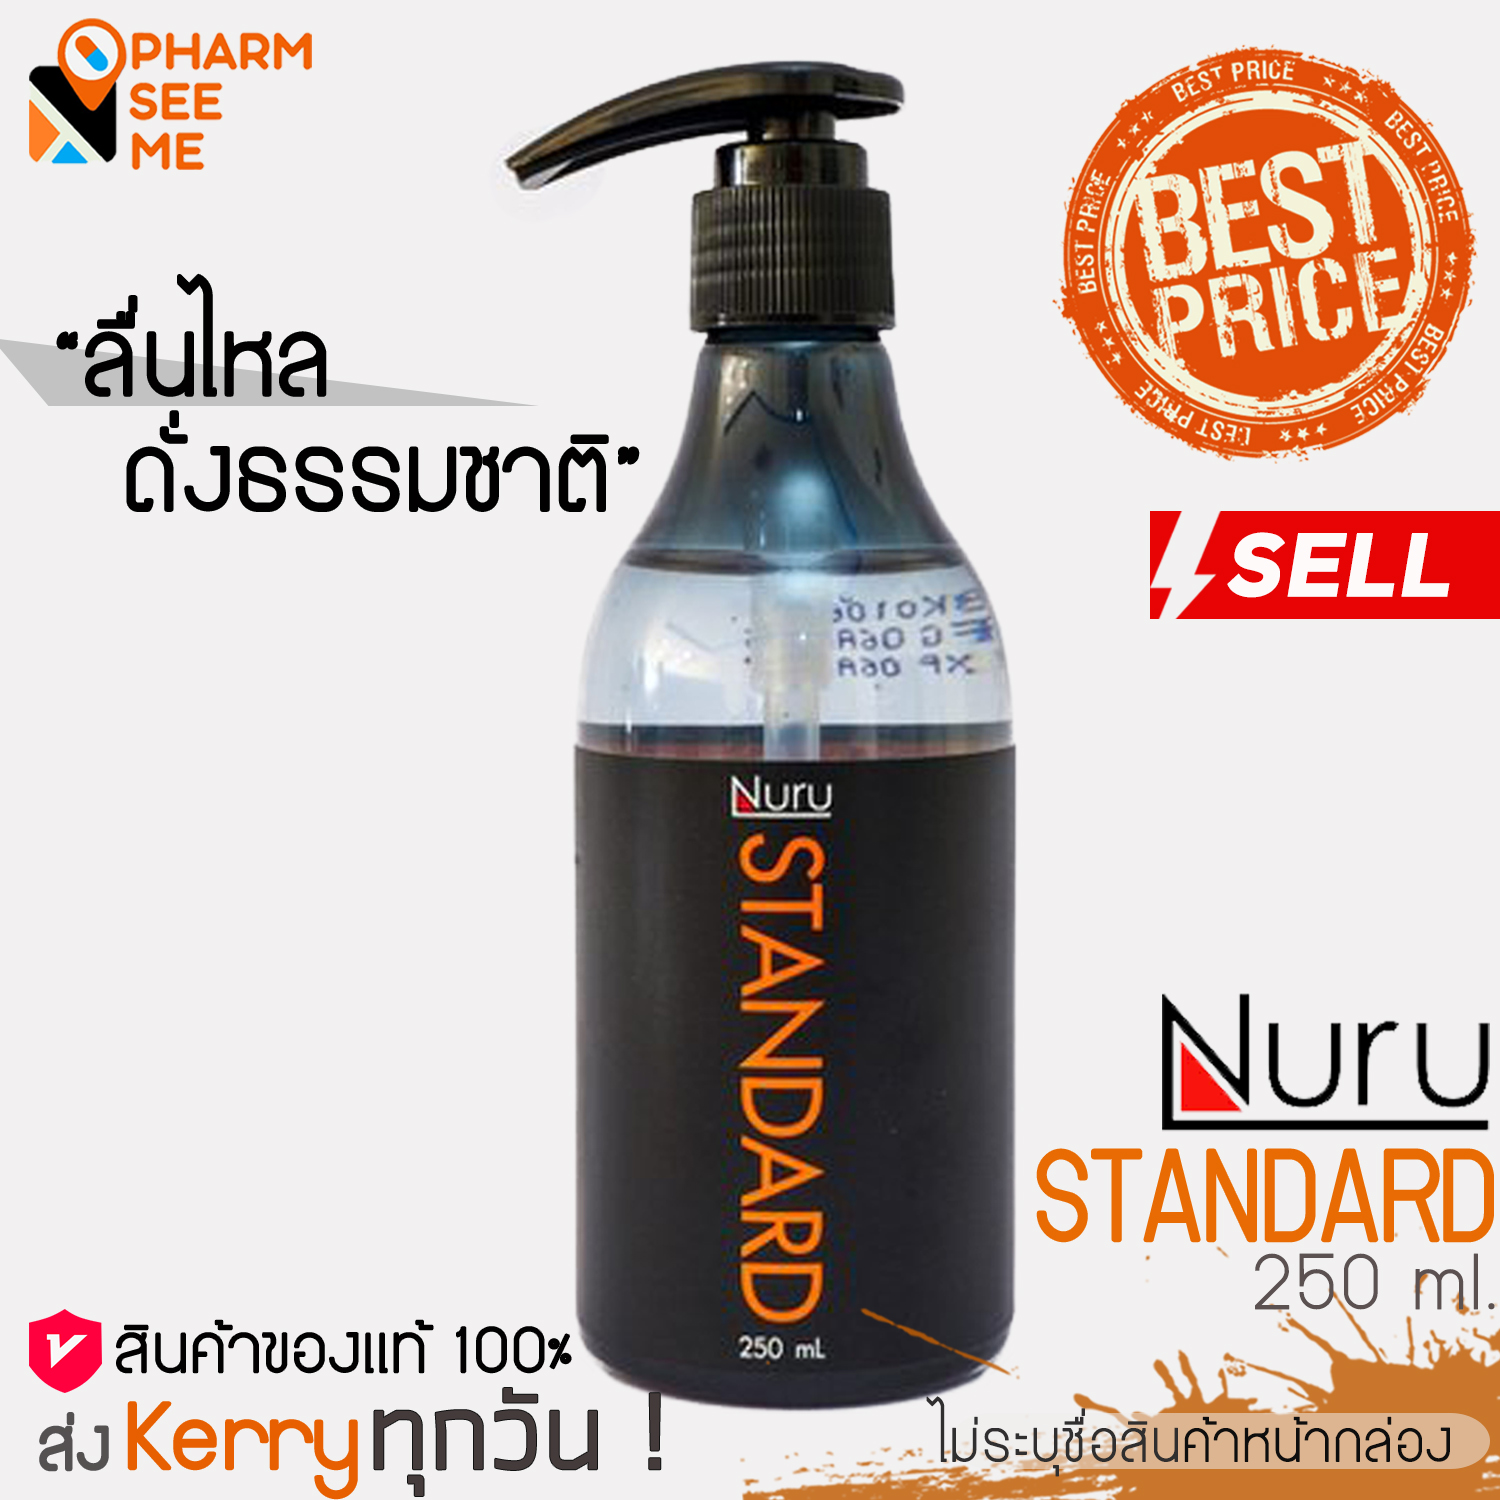 Nuru Gel standard 250 ml นูรุ เจลหล่อลื่น สูตร พื้นฐาน 250 มล. เจลหล่อลื่น นูรู เจลนำเข้าจากญี่ปุ่น สูตรความหนืดเหมือนธรรมชาติ